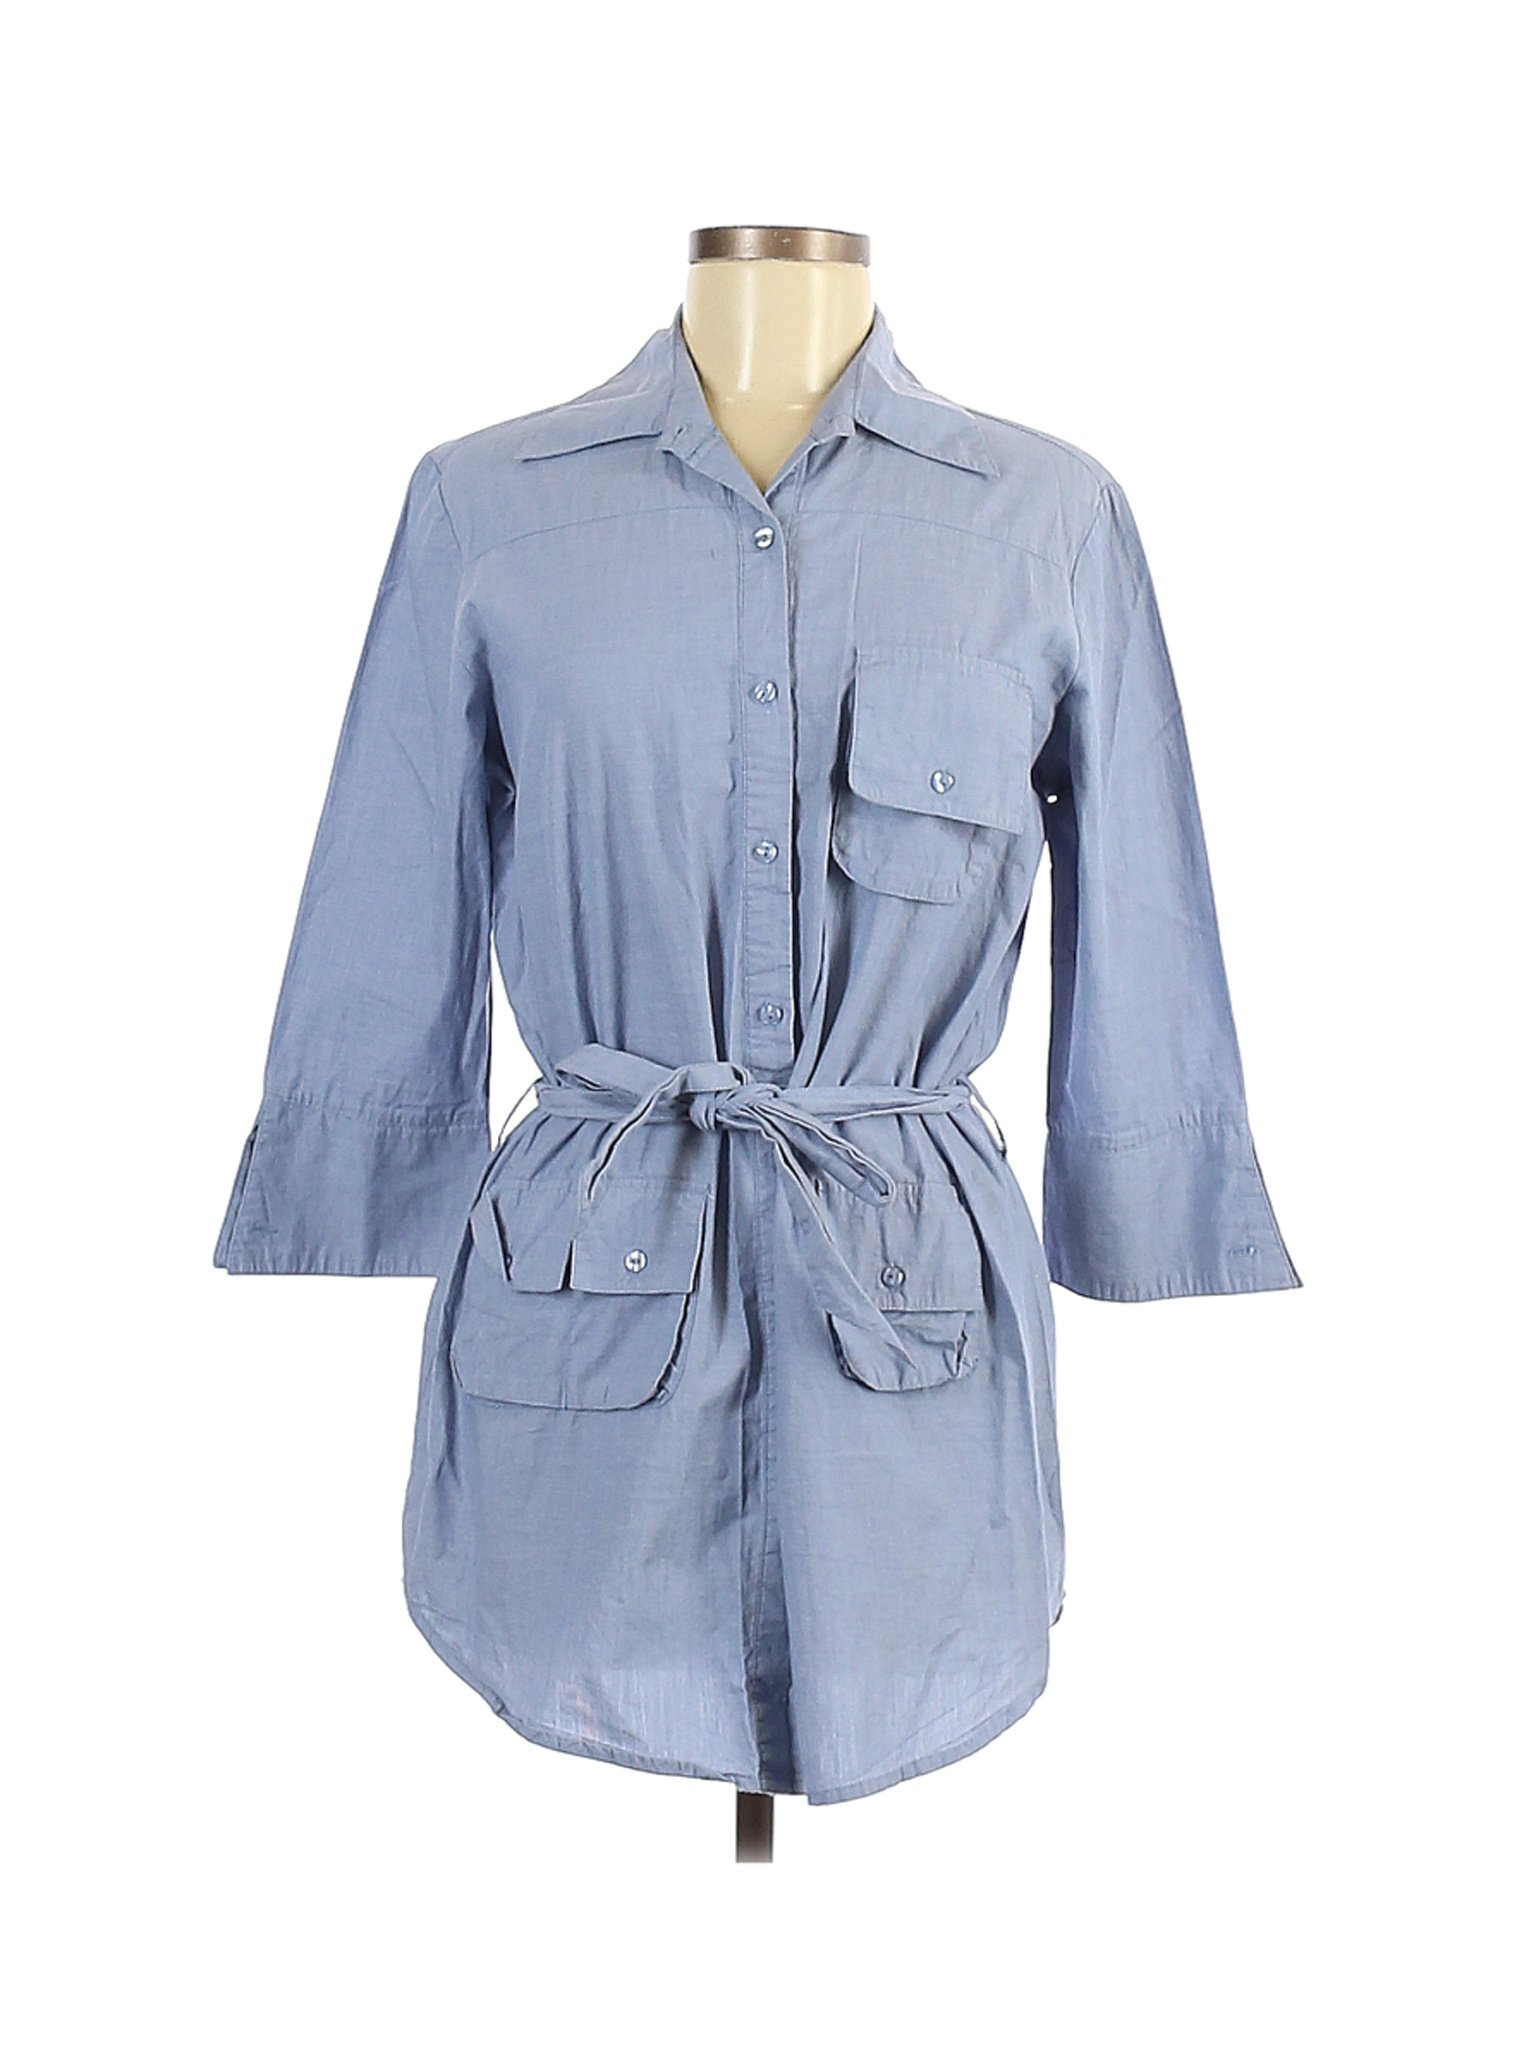 Capri Women Blue 3/4 Sleeve Button-Down Shirt L | eBay